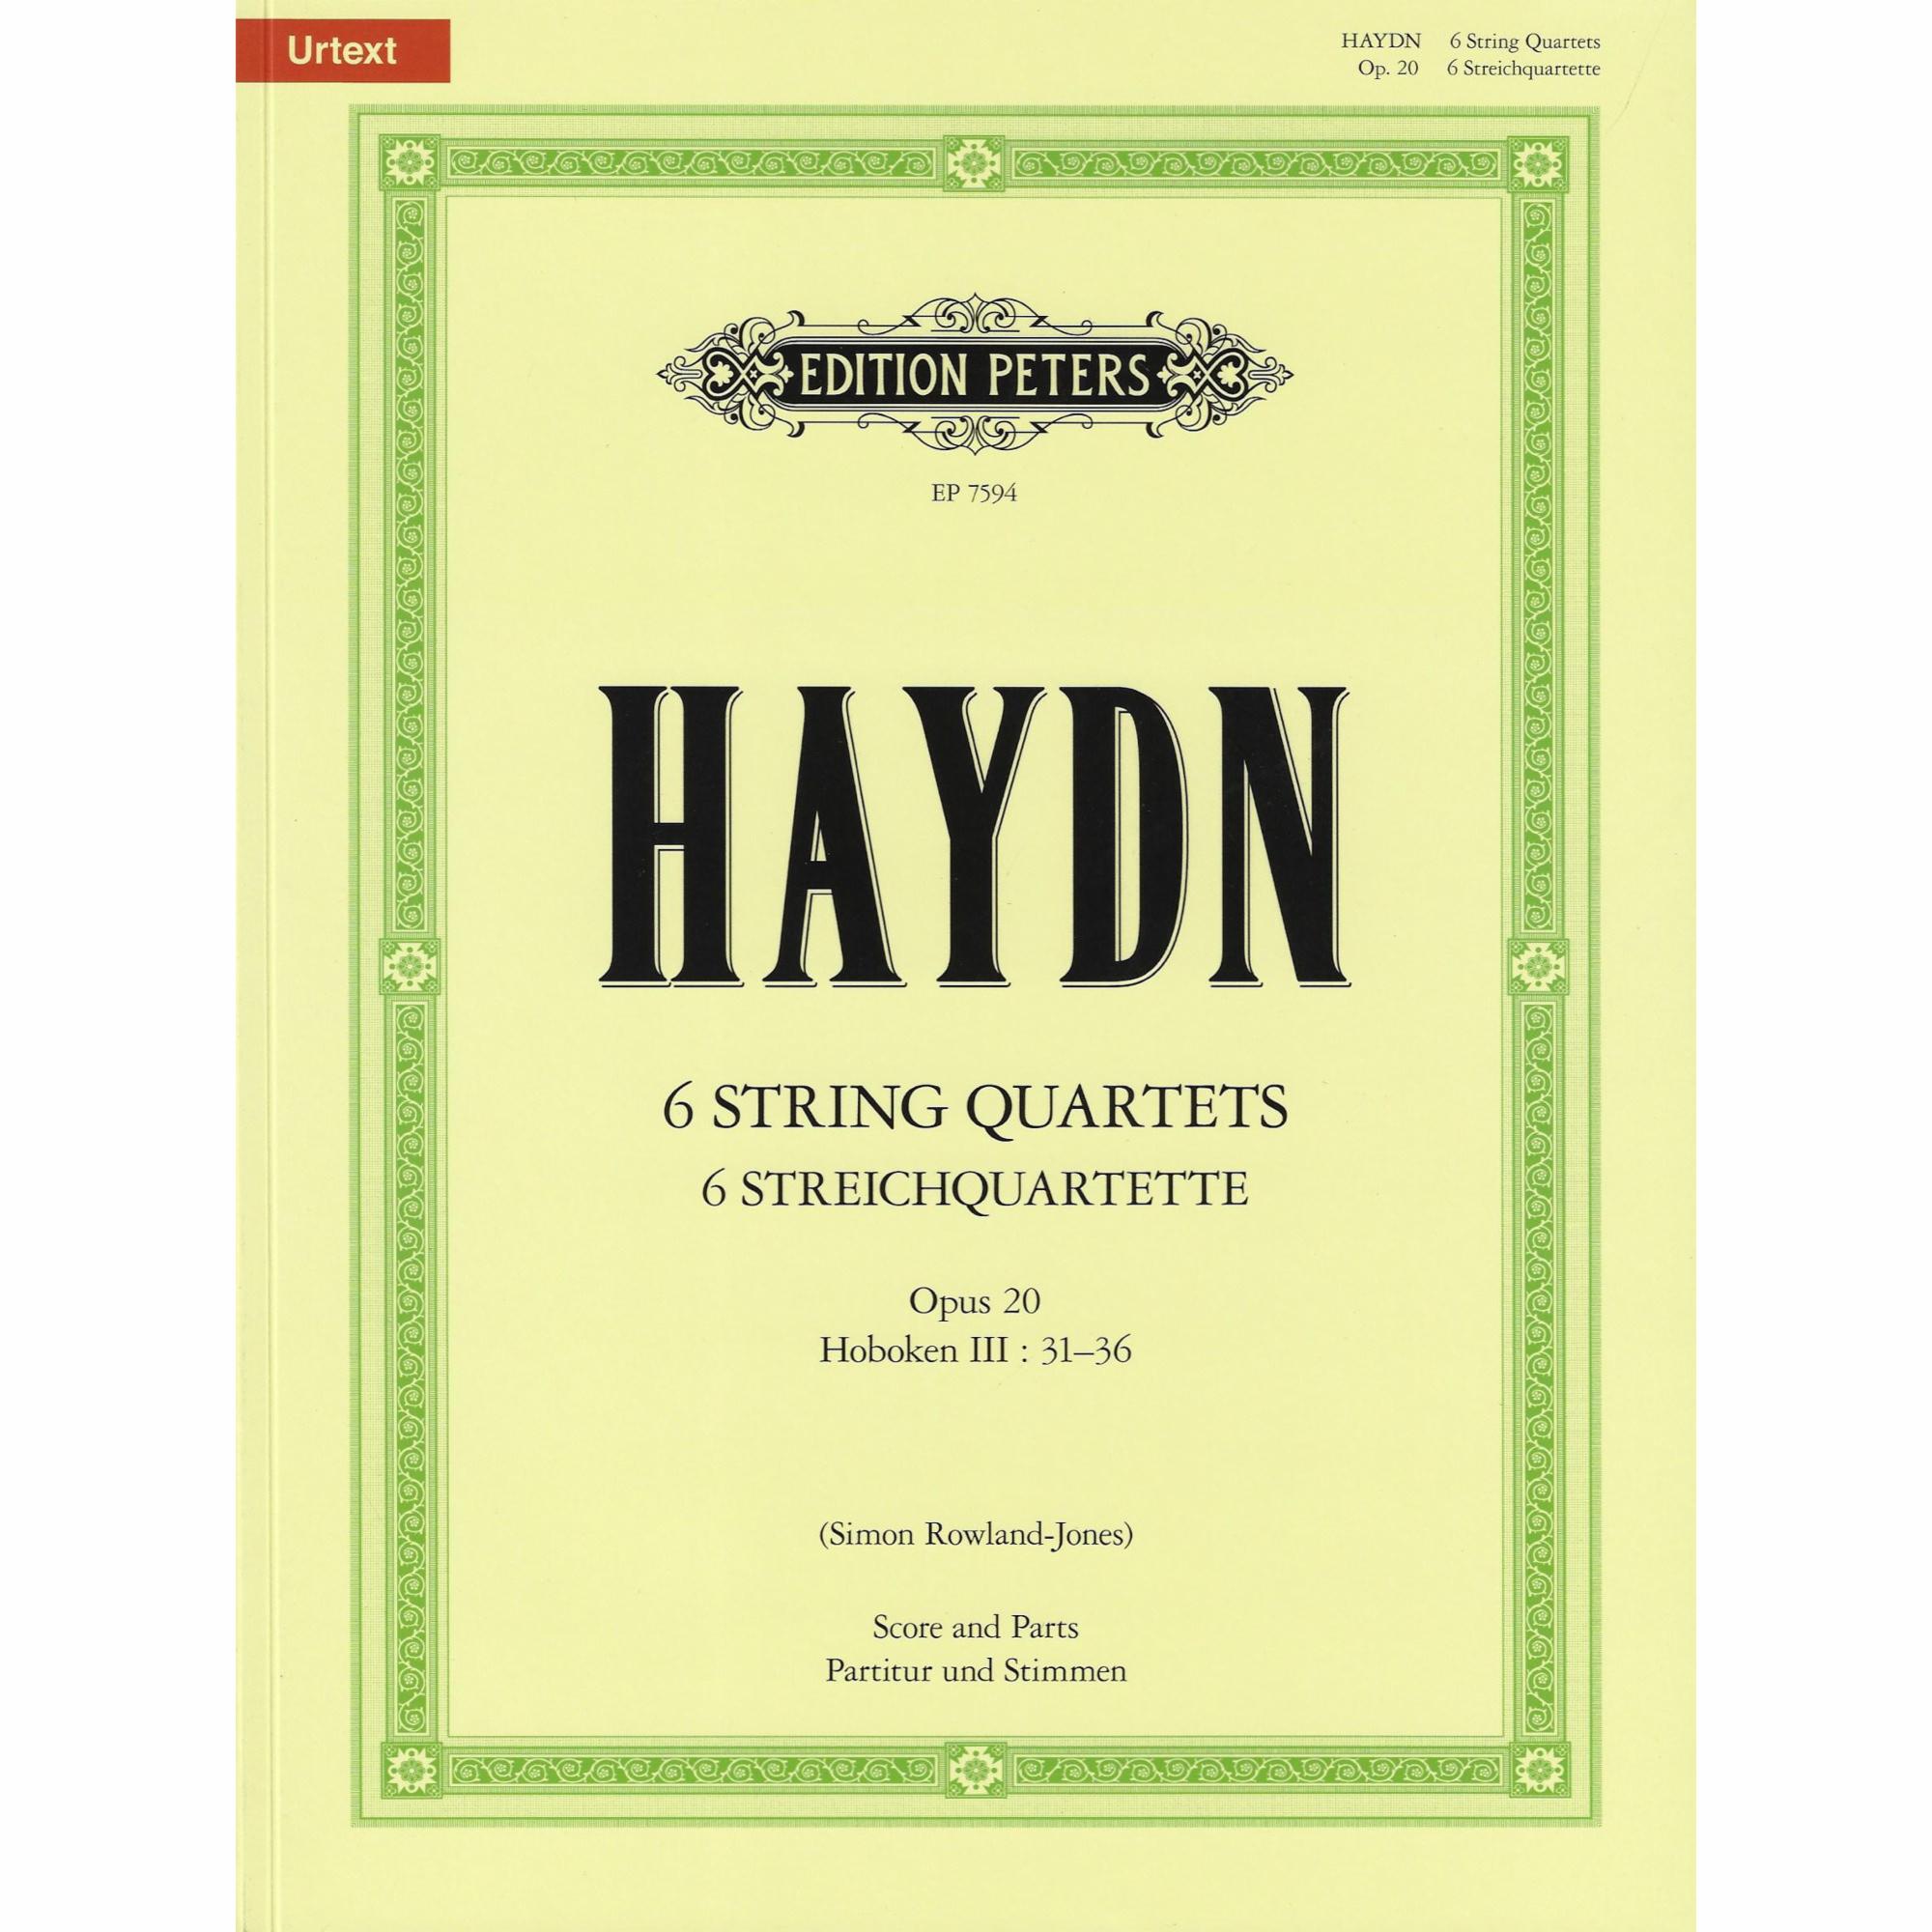 Haydn -- 6 String Quartets, Op. 20